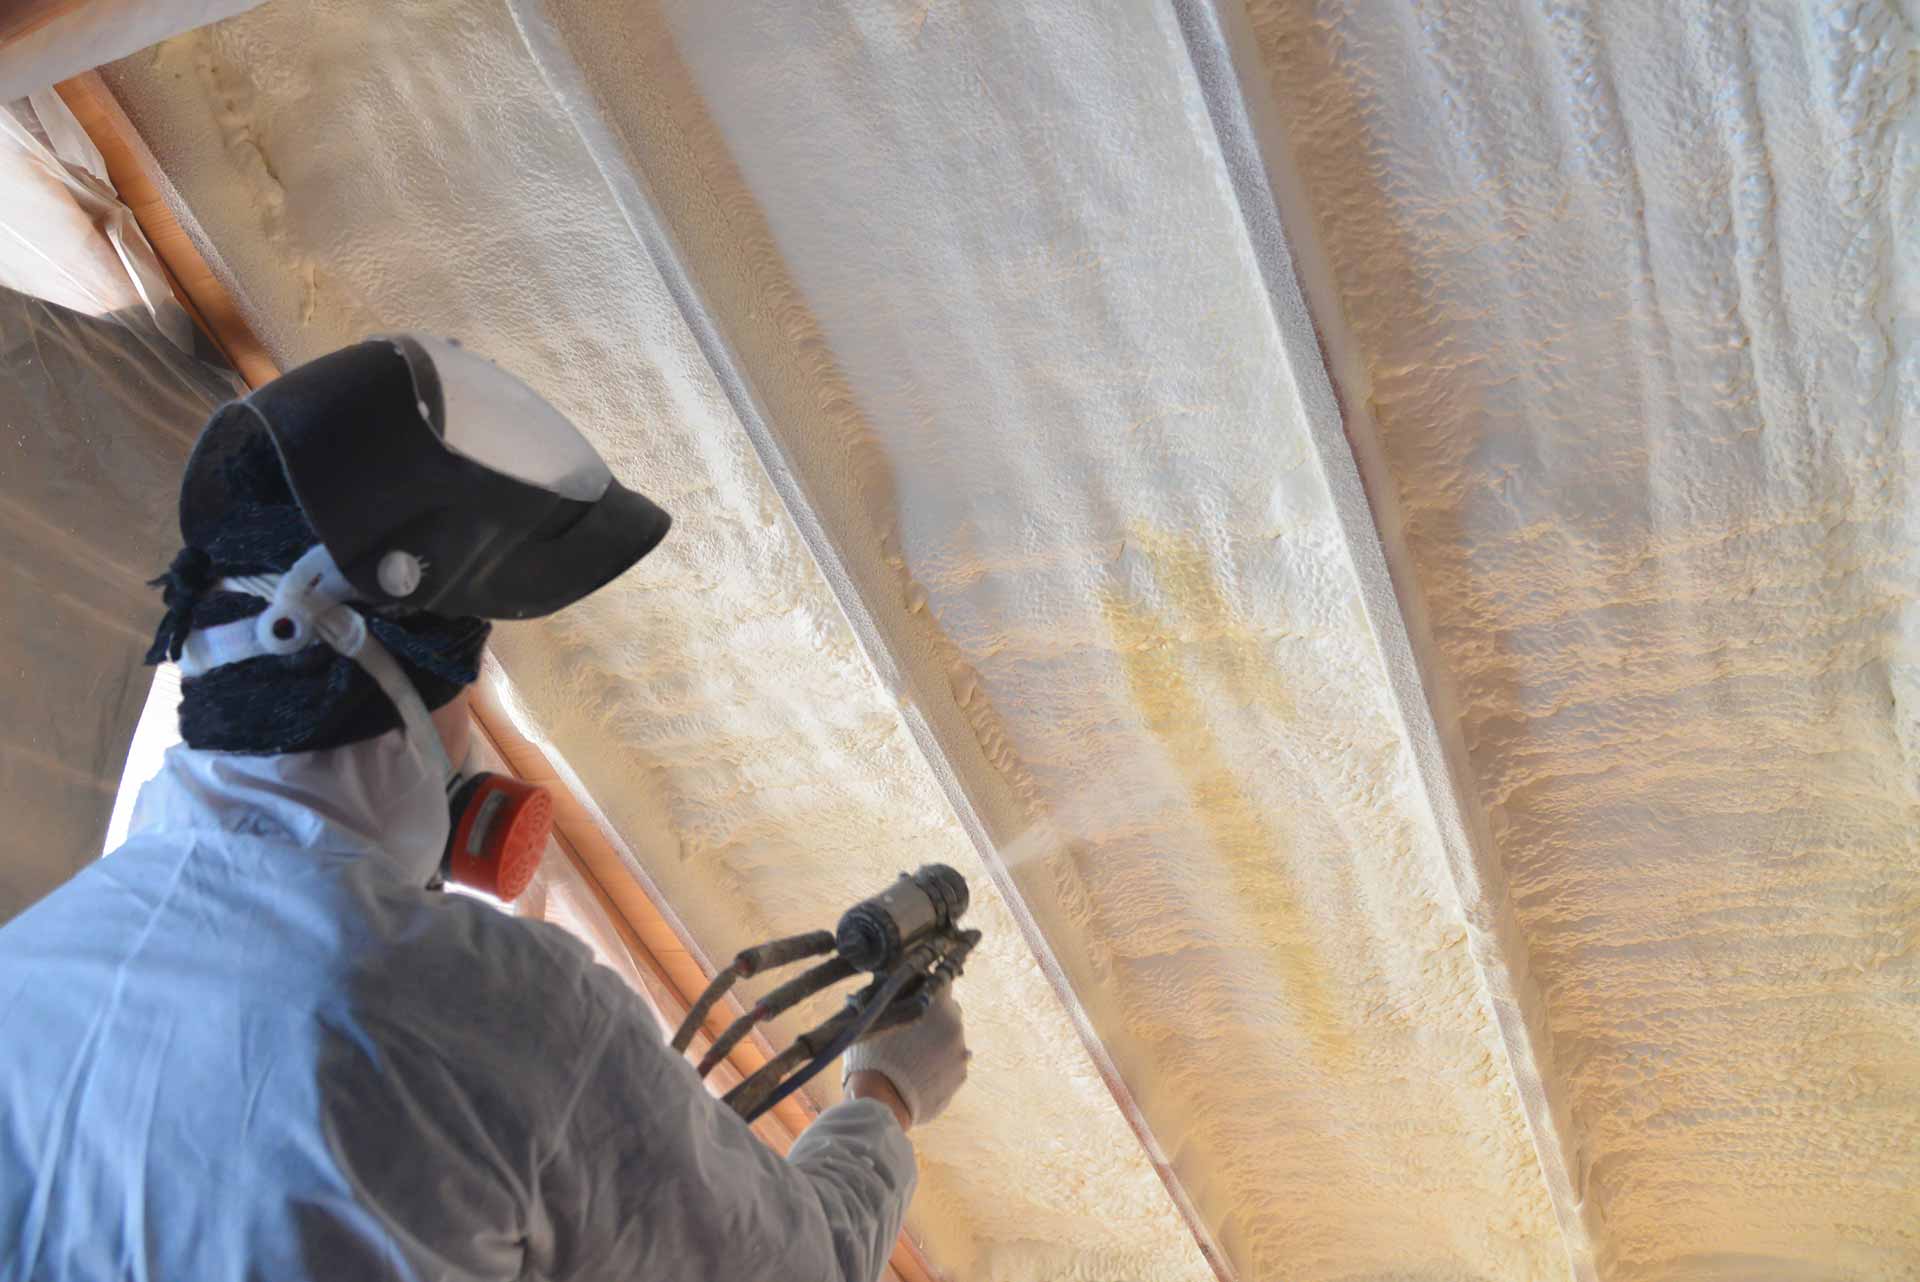 Worker spraying foam insulation in attic